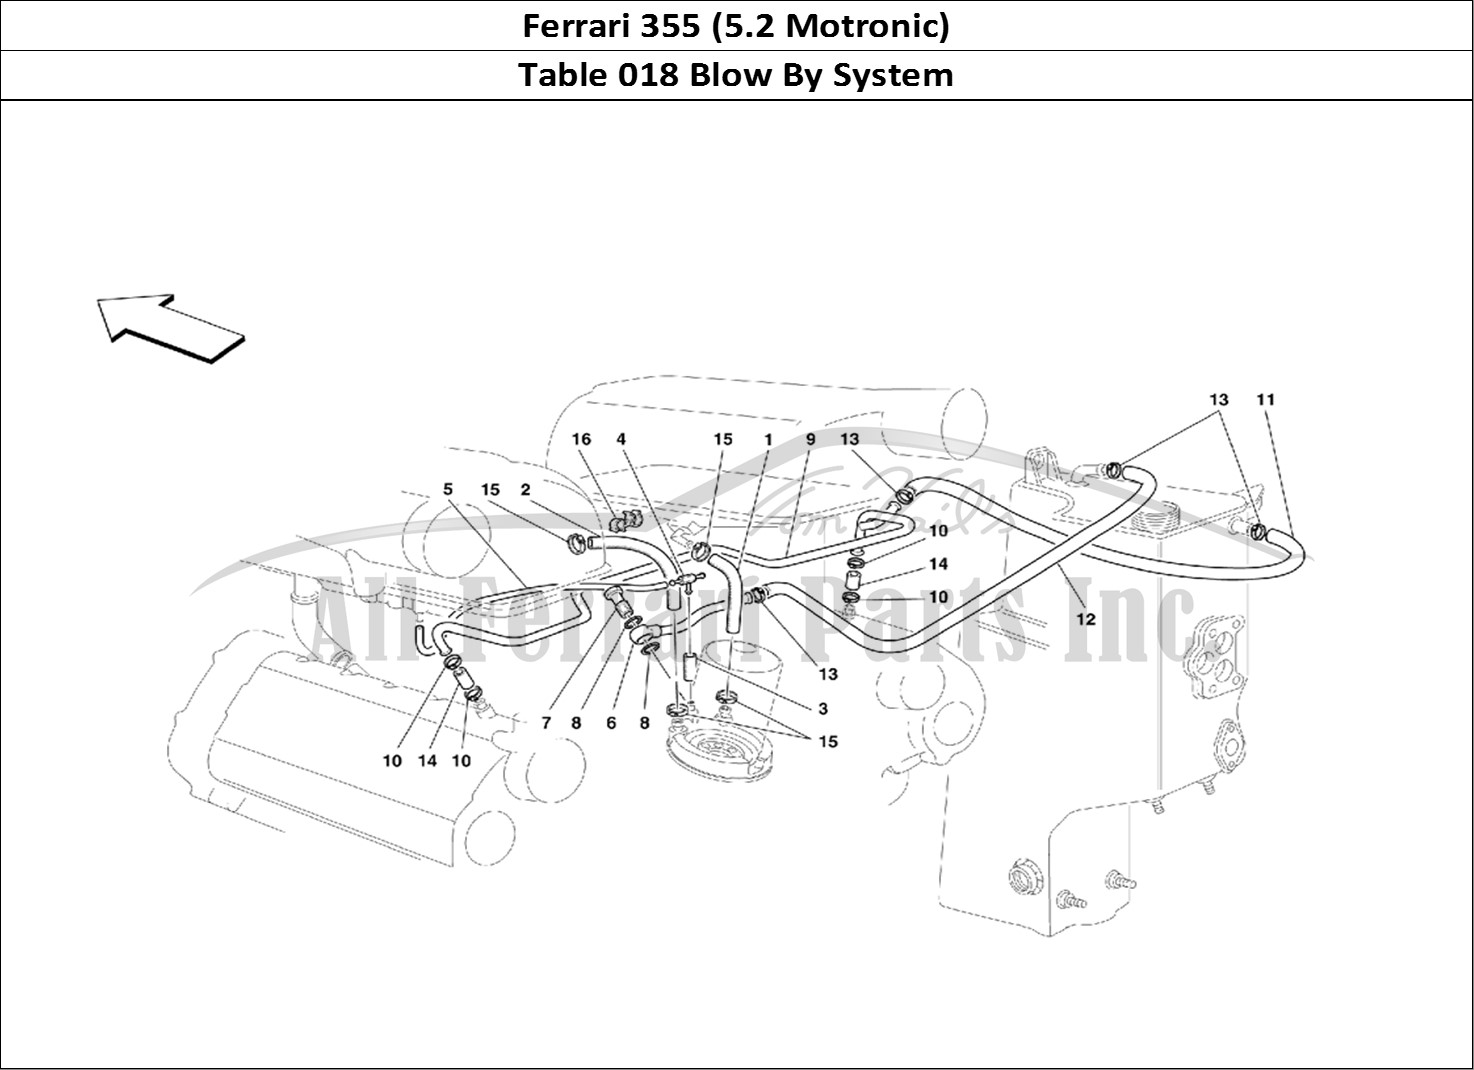 Ferrari Parts Ferrari 355 (5.2 Motronic) Page 018 Blow - By System